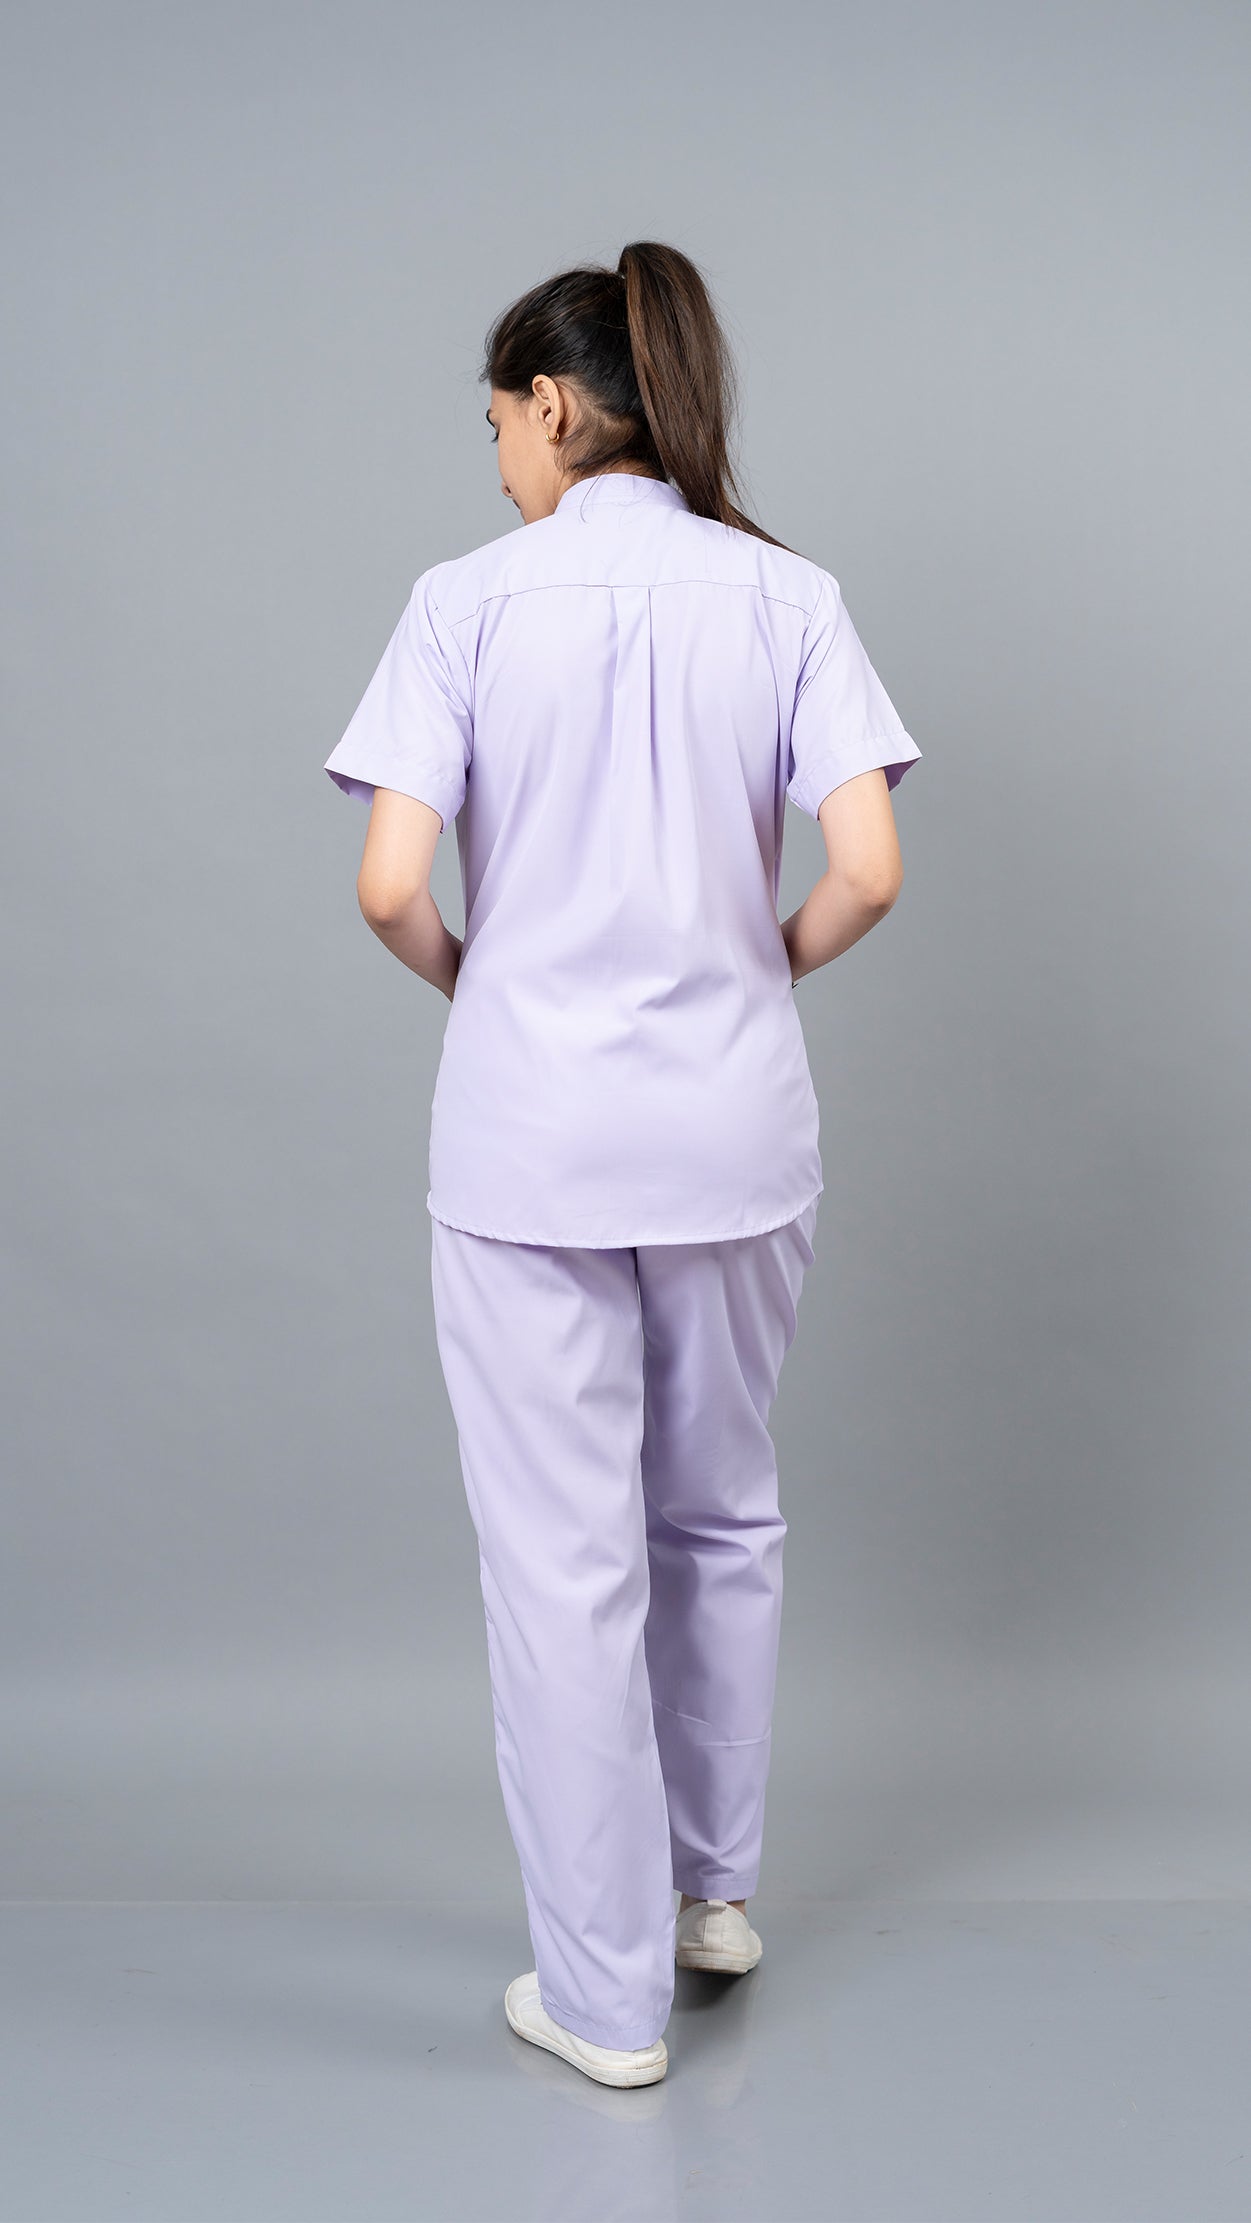 Vastramedwear’s Lavender Women's Mandarin Collar Scrub Suit for Doctors